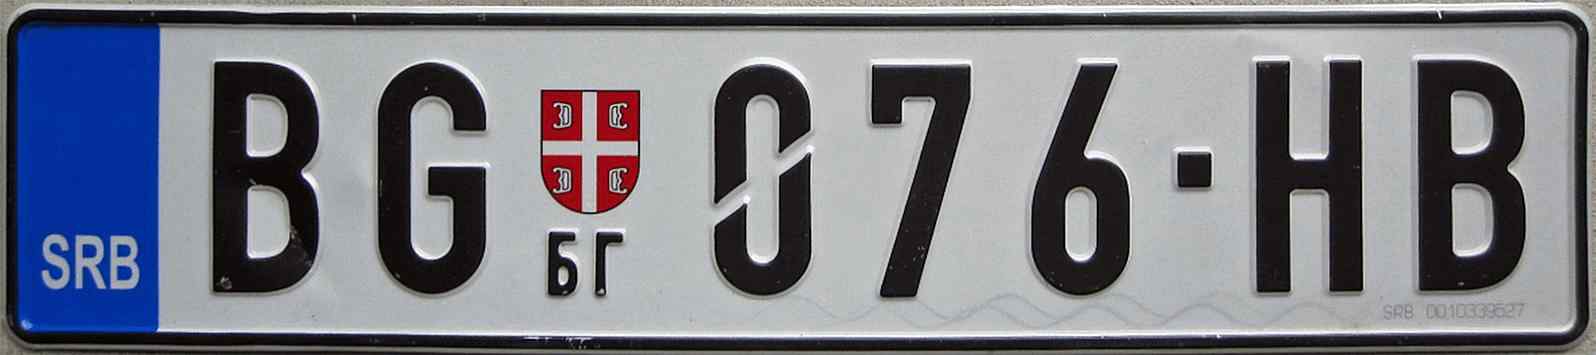 Serbia License Plate 1